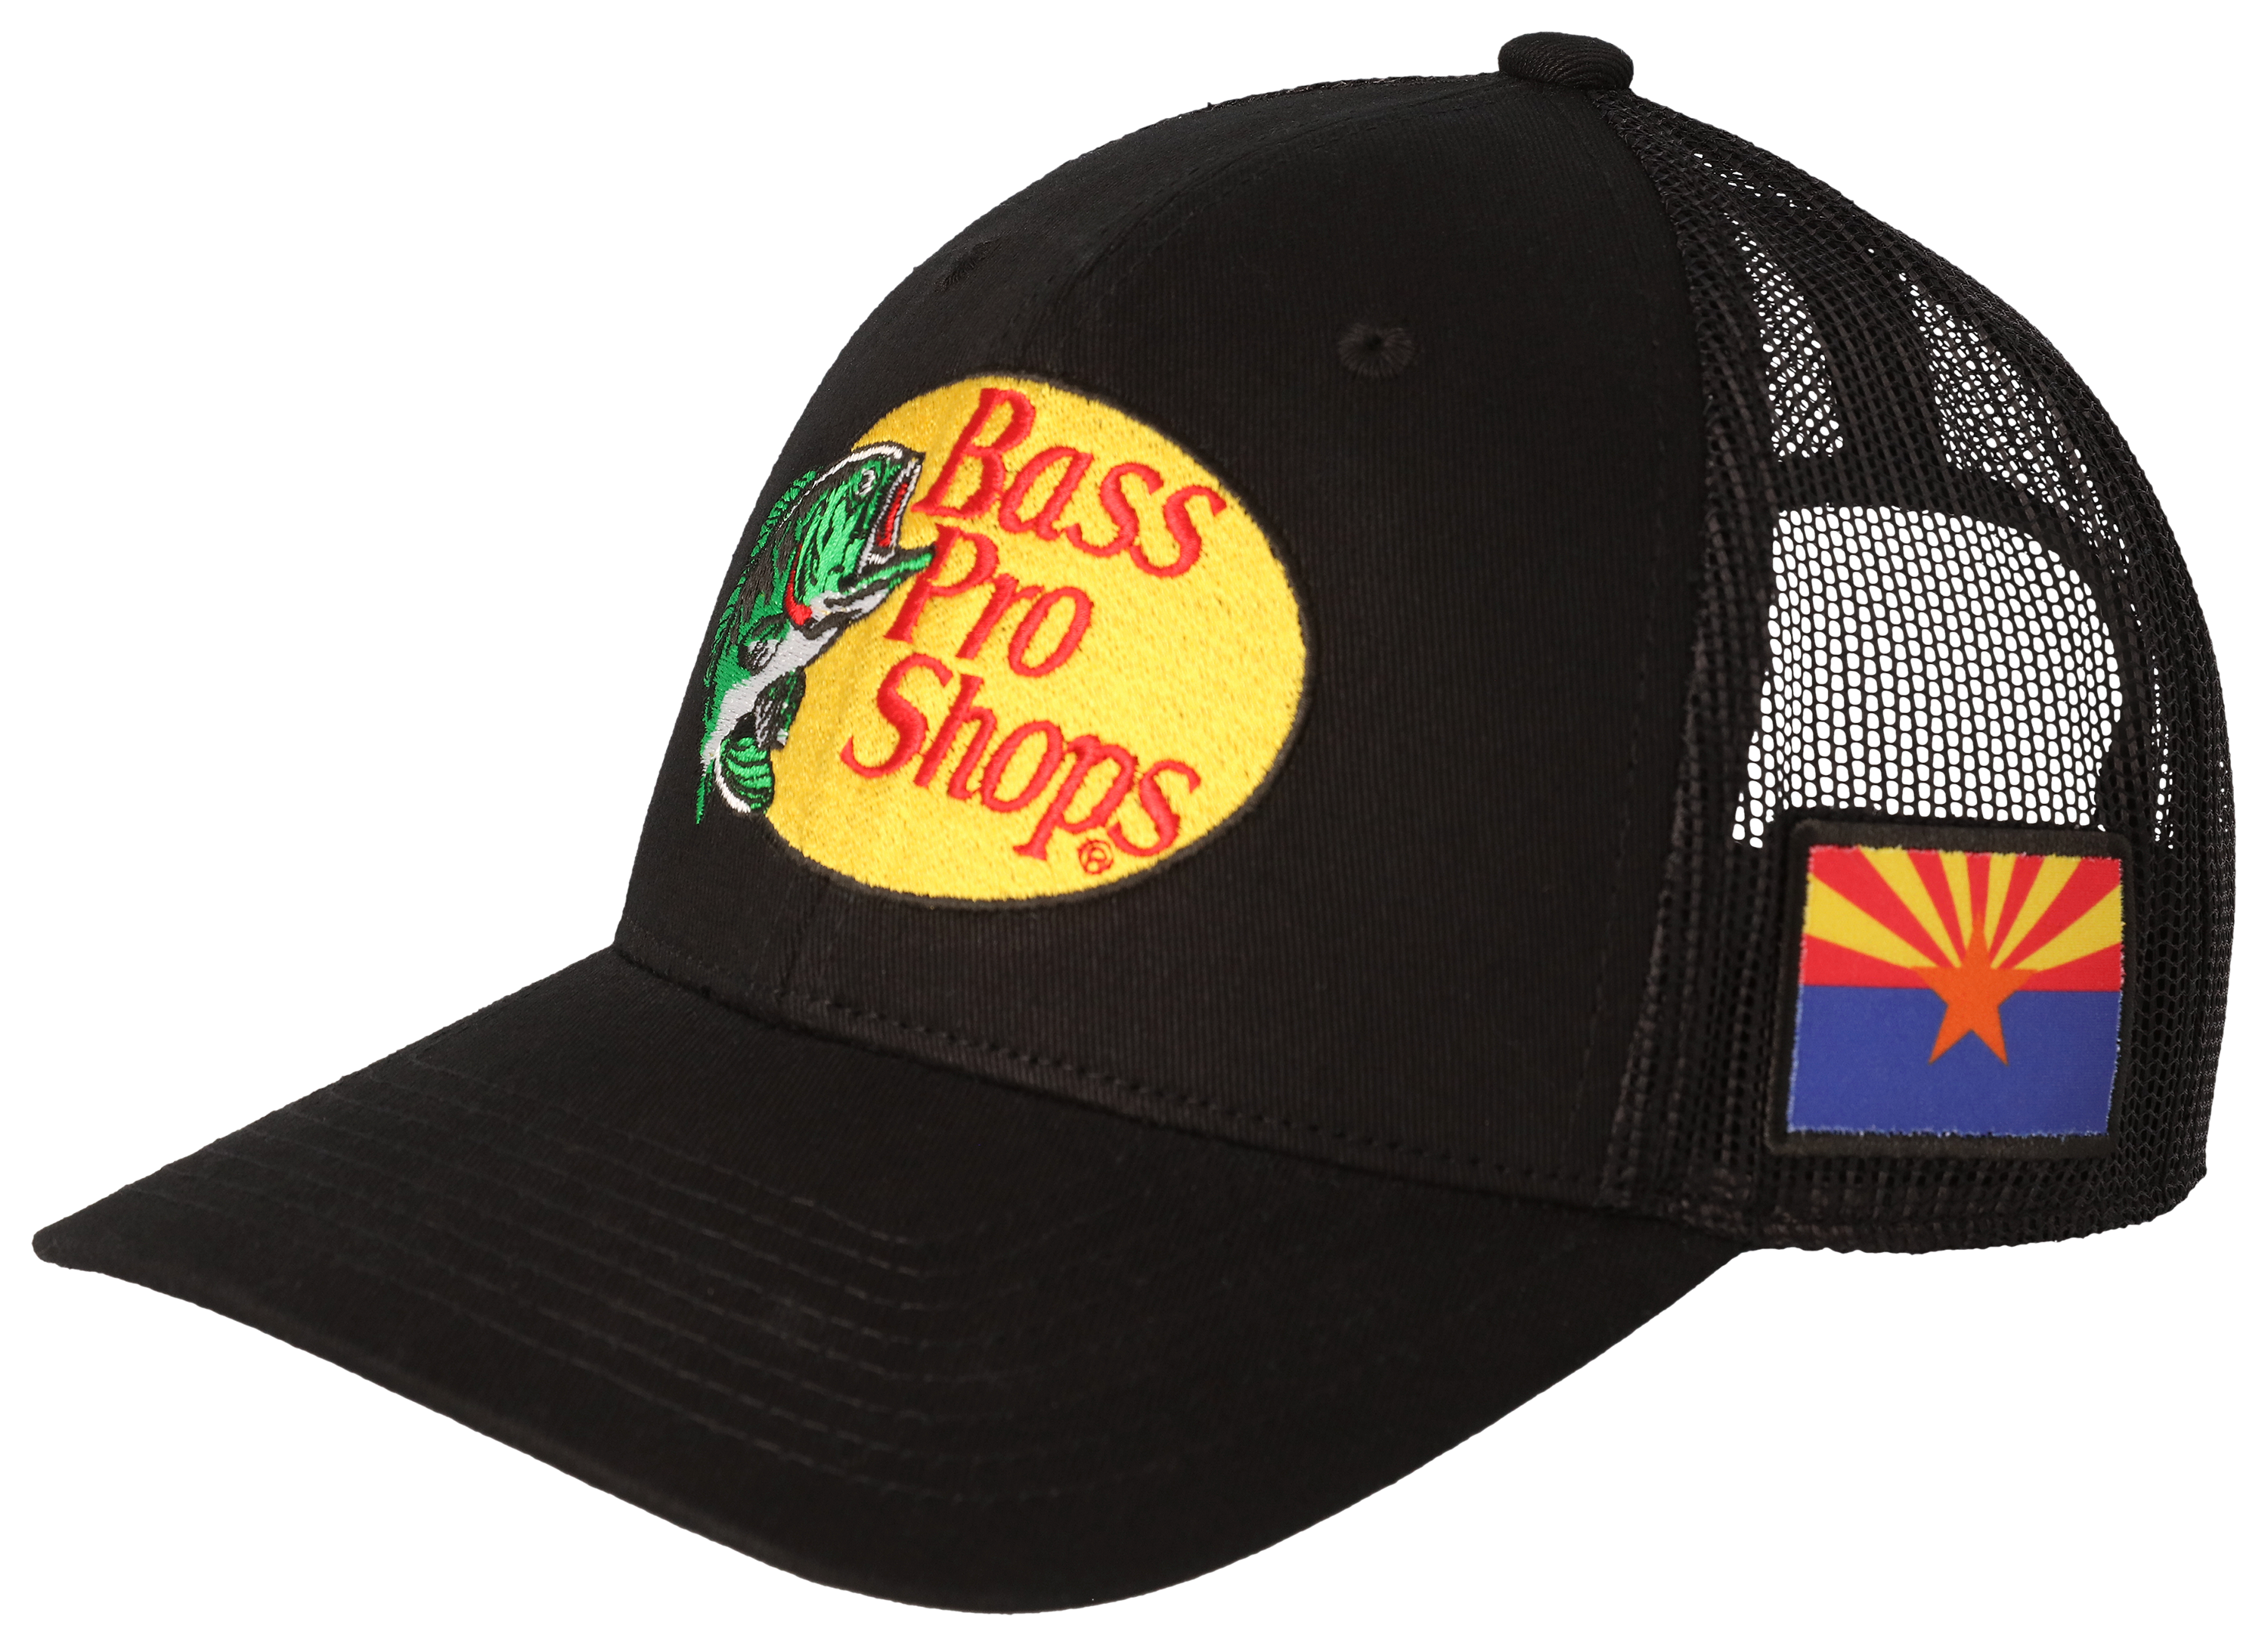 Bass Pro Shops Woodcut Logo and Arizona Flag Snapback Cap